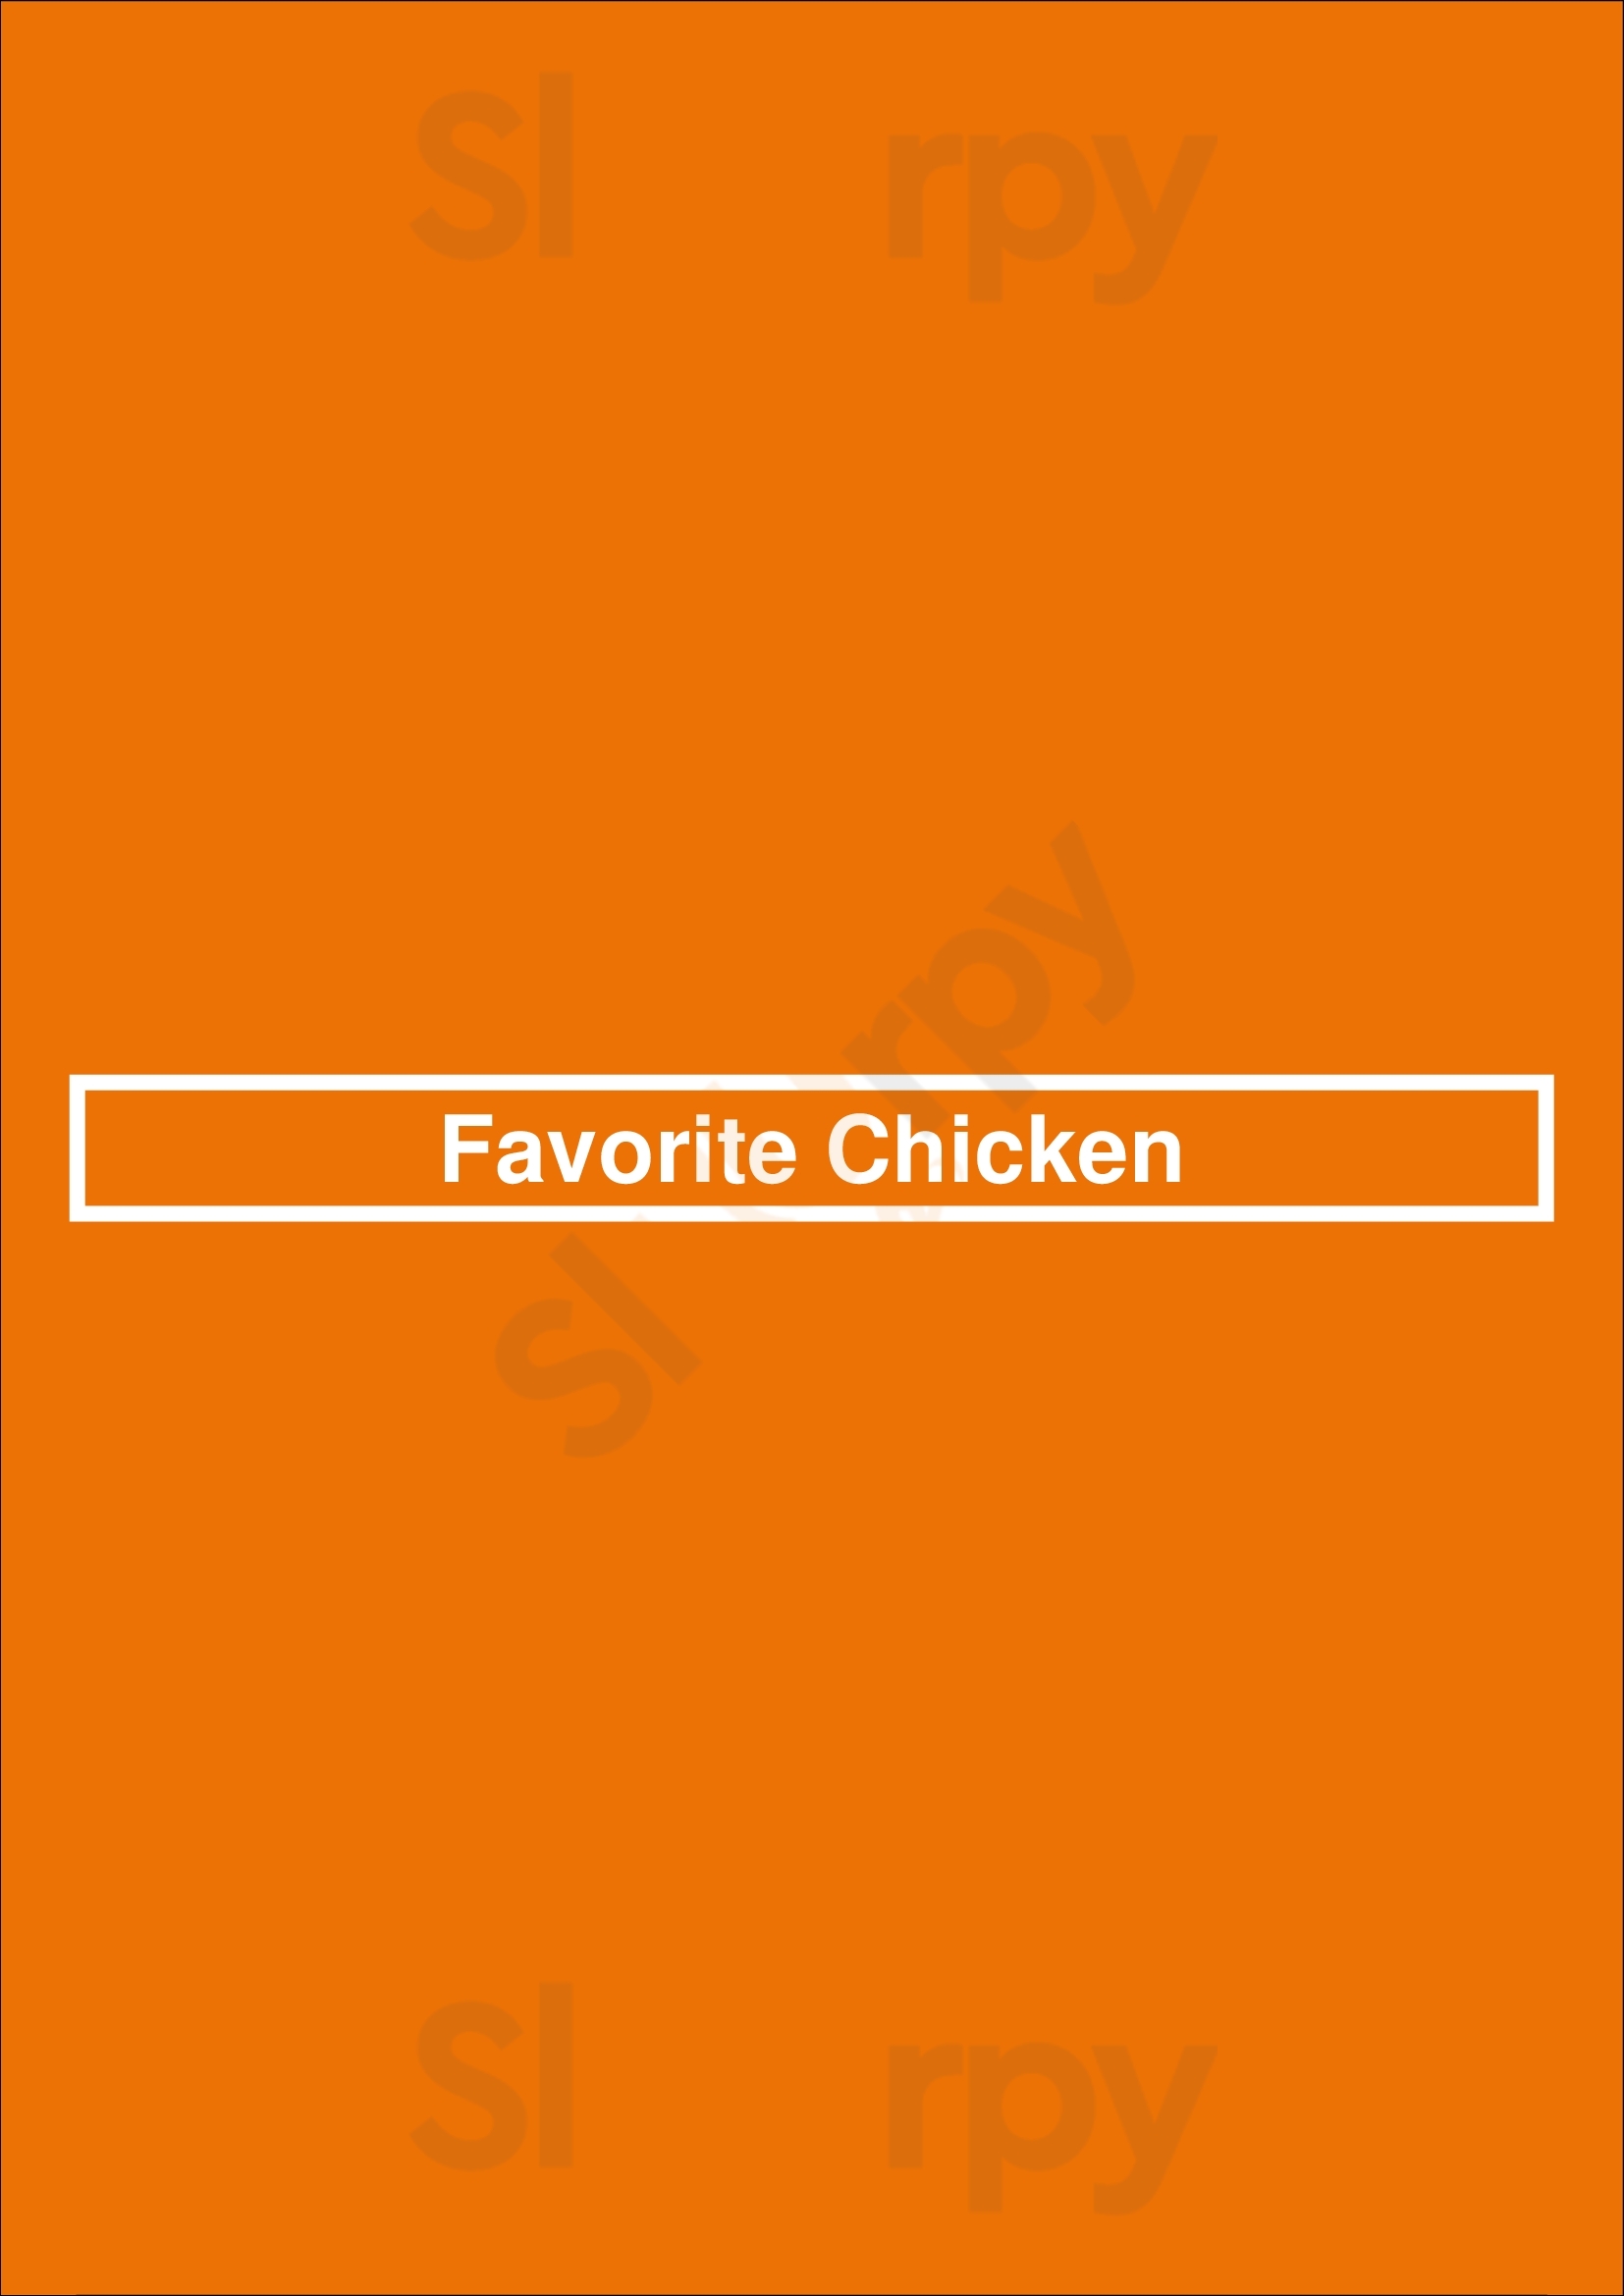 Favorite Chicken London Menu - 1